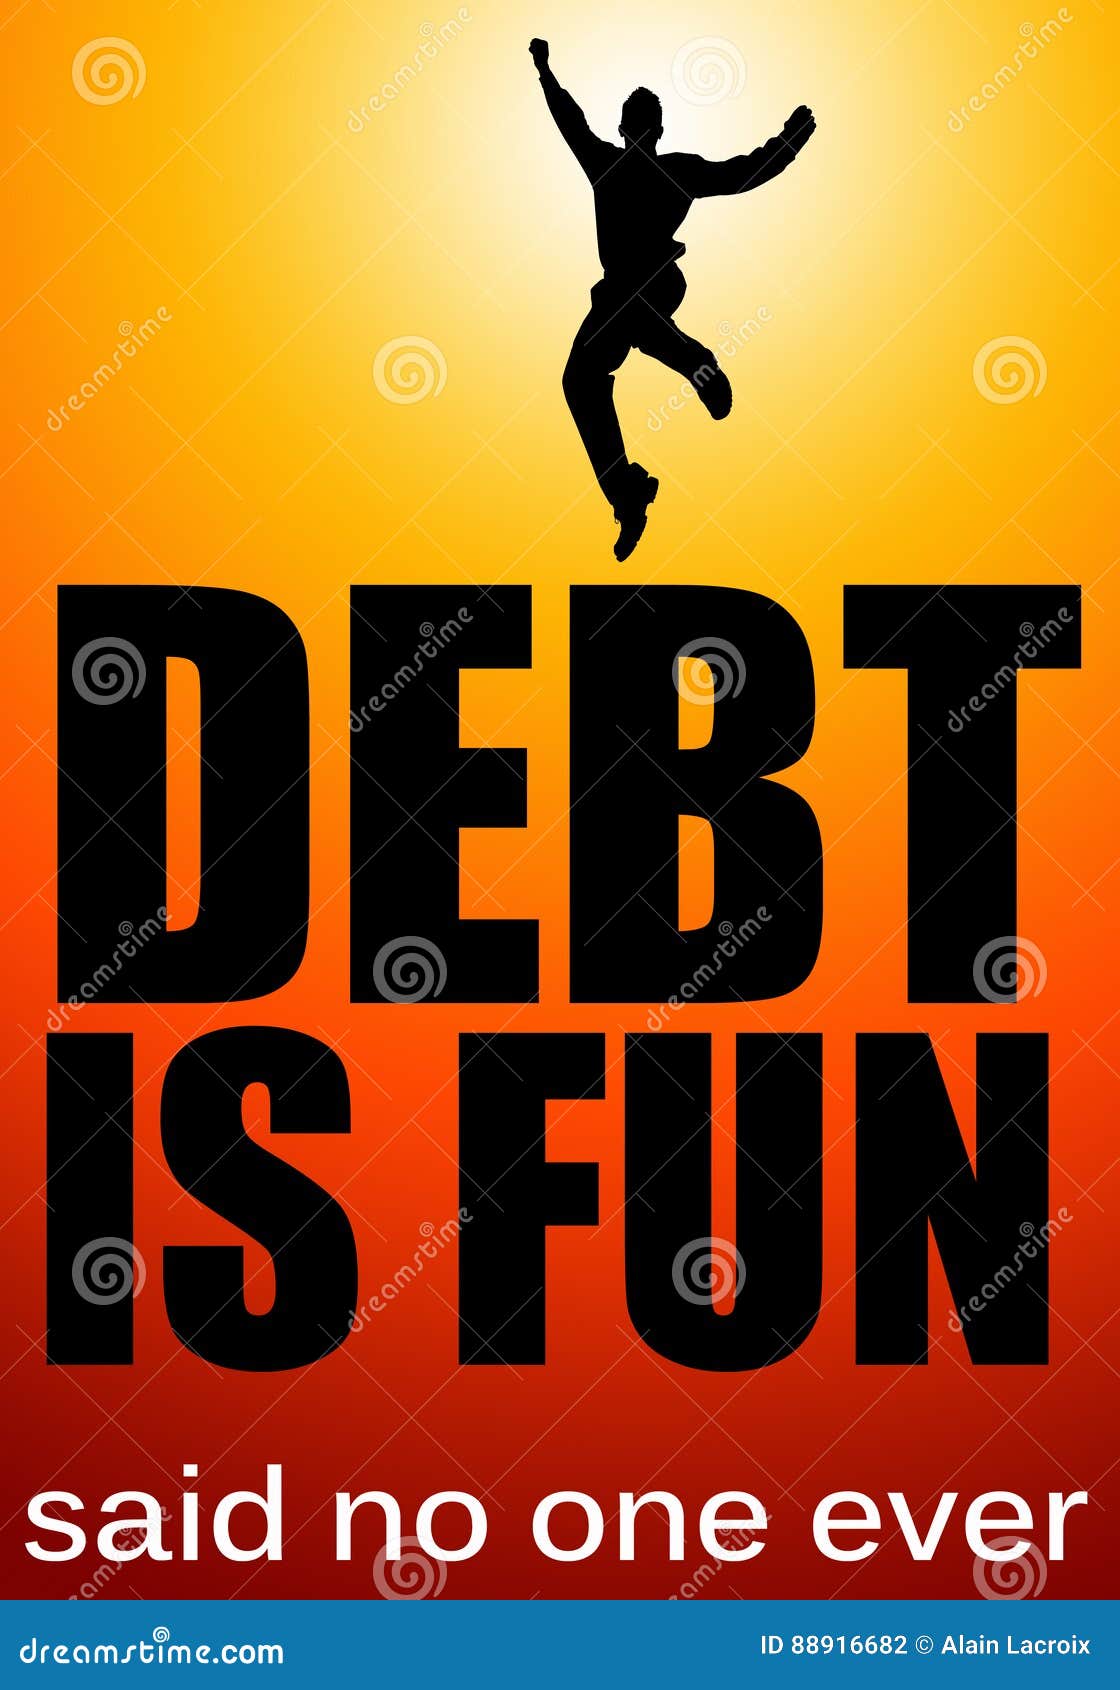 having debts